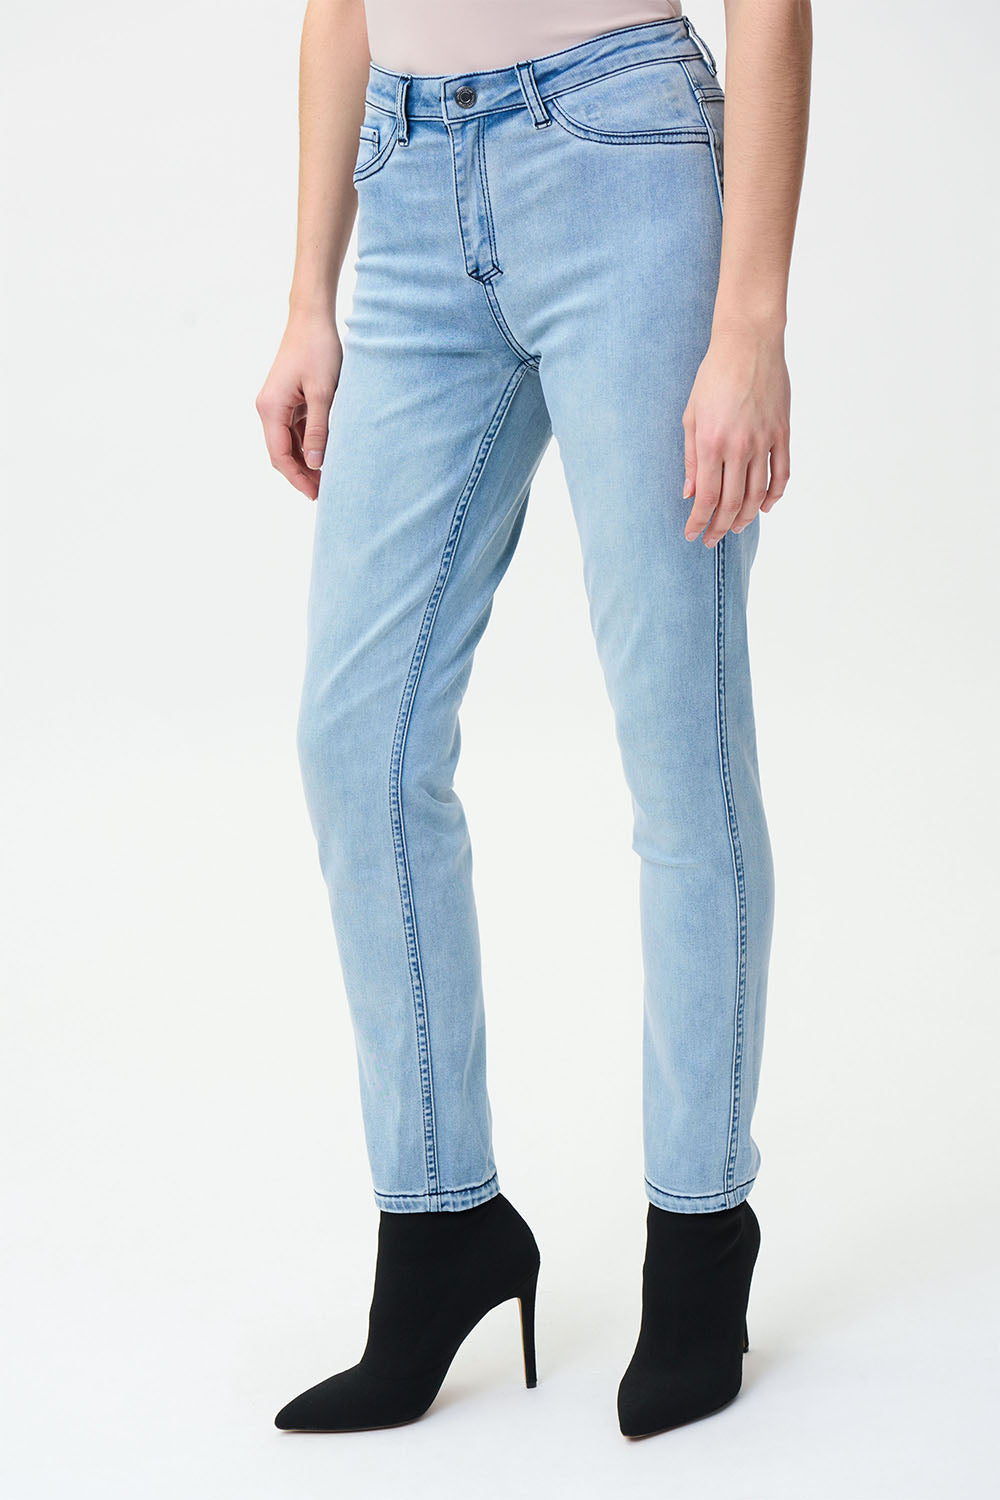 Joseph Ribkoff Reversible Paisley Jeans Jr224935